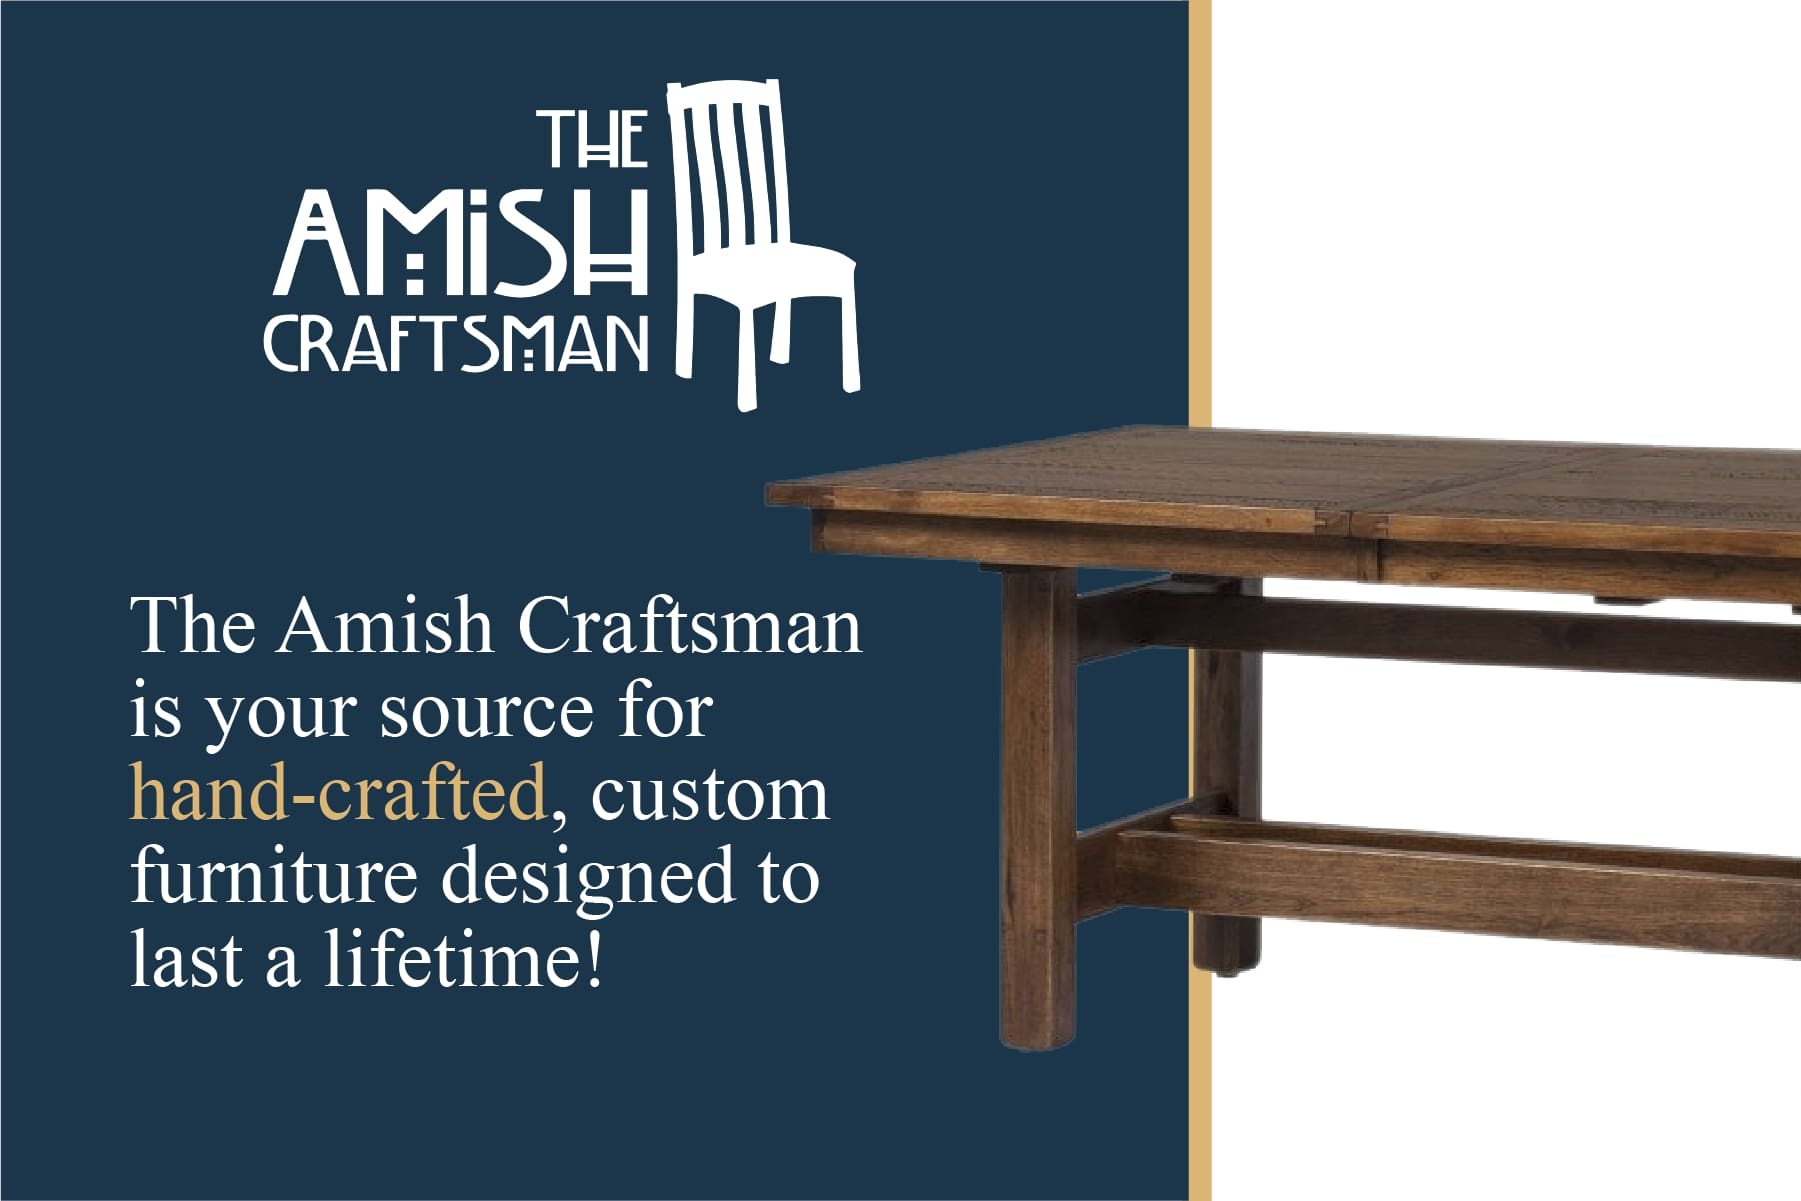 The Amish Craftsman makes custom furniture